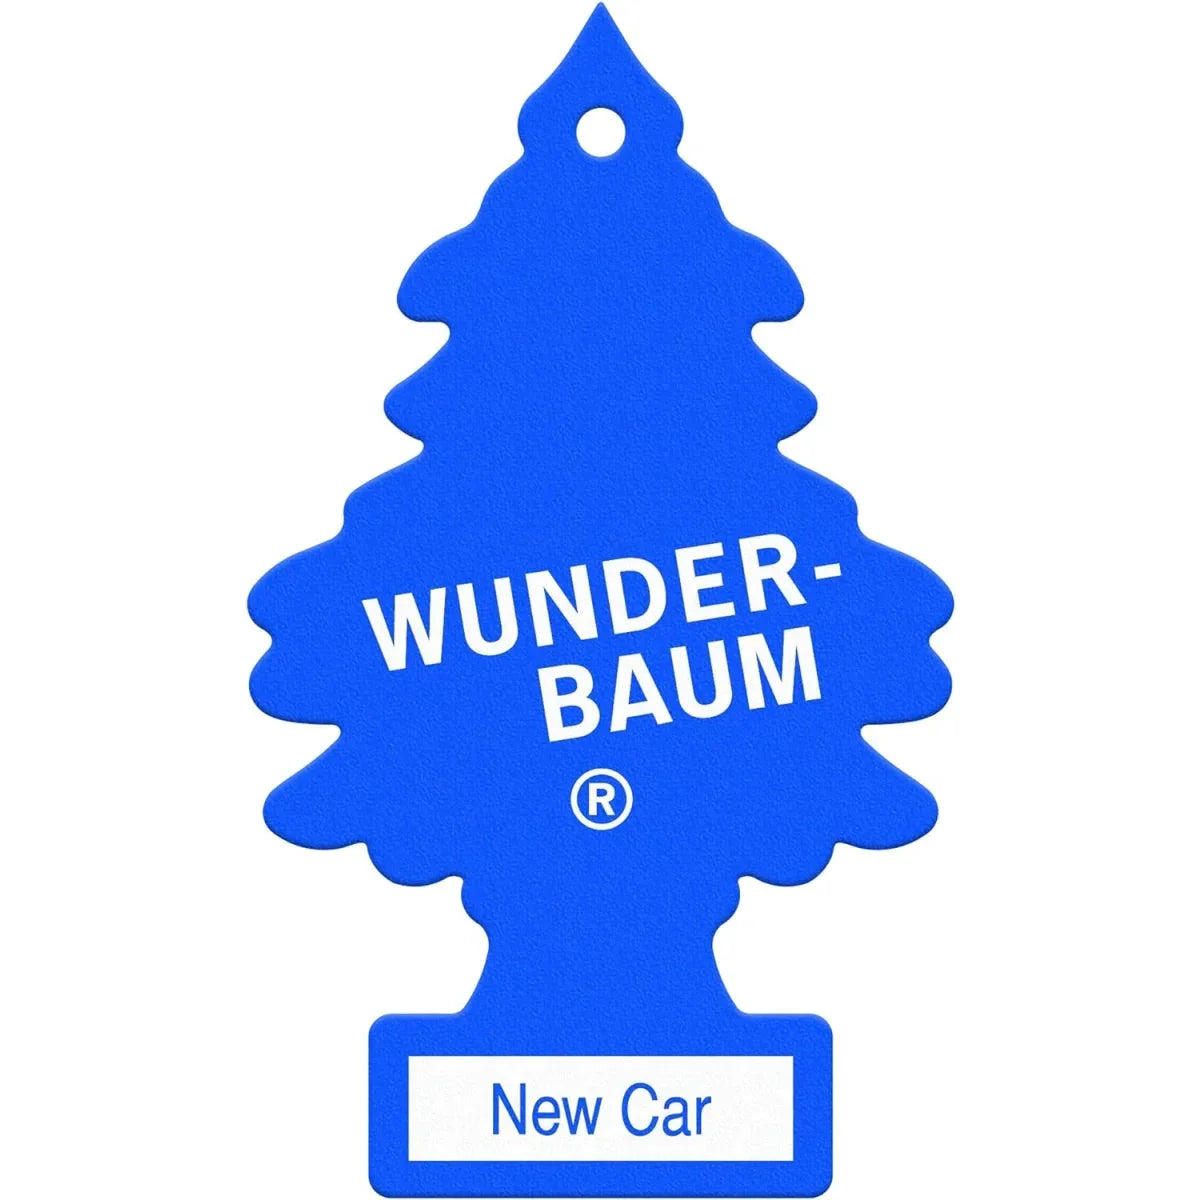 Wunder-baum New Car